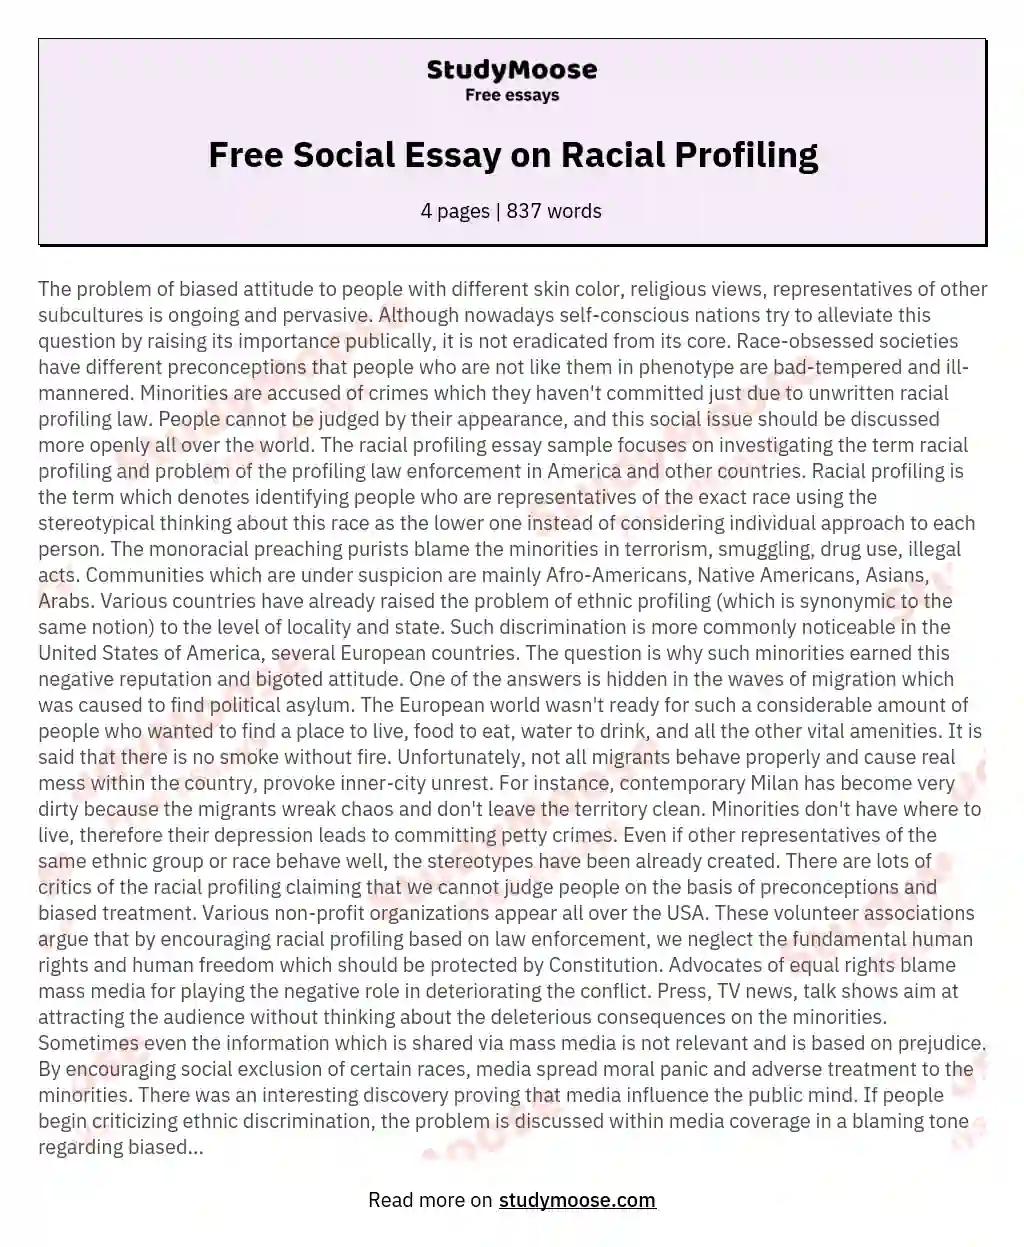 Free Social Essay on Racial Profiling essay